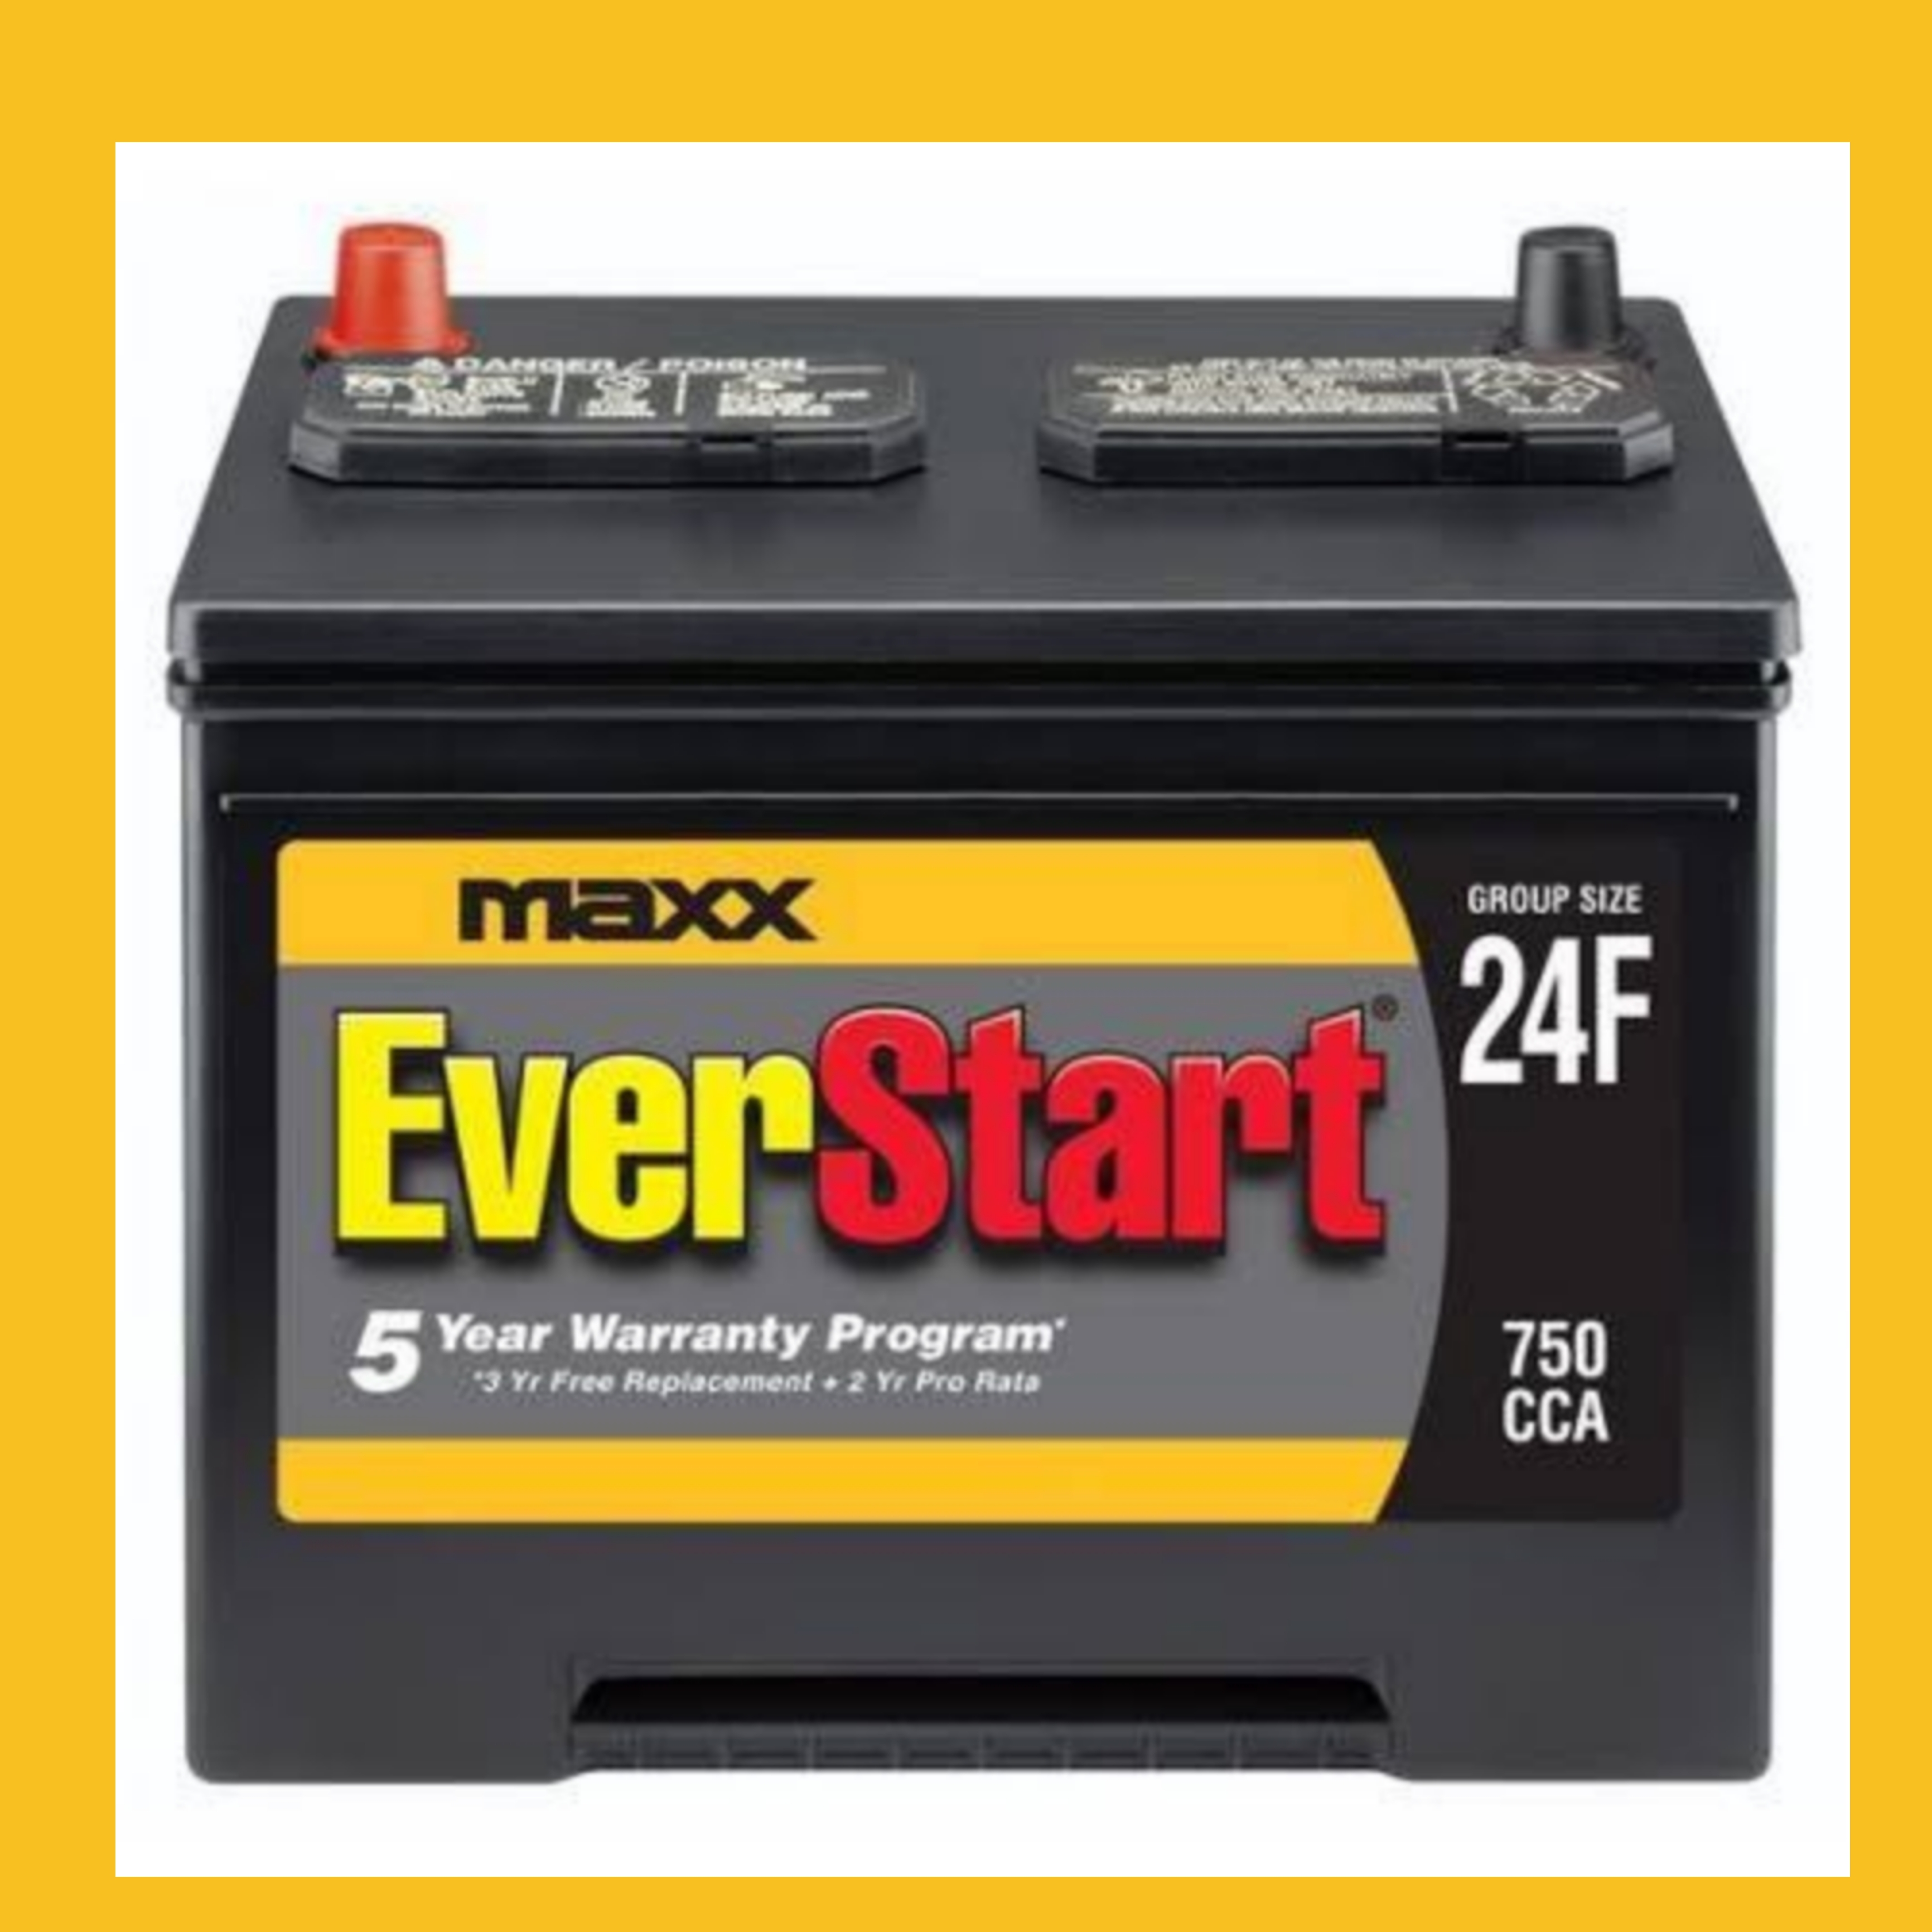 Battery limit. Everstart lead acid Marine starting Battery, Group Size 24ms - 1000 MCA (12 Volt/1000 MCA). АКБ everstart es20lbs. 24f АКБ. HQF Maxx аккумулятор.